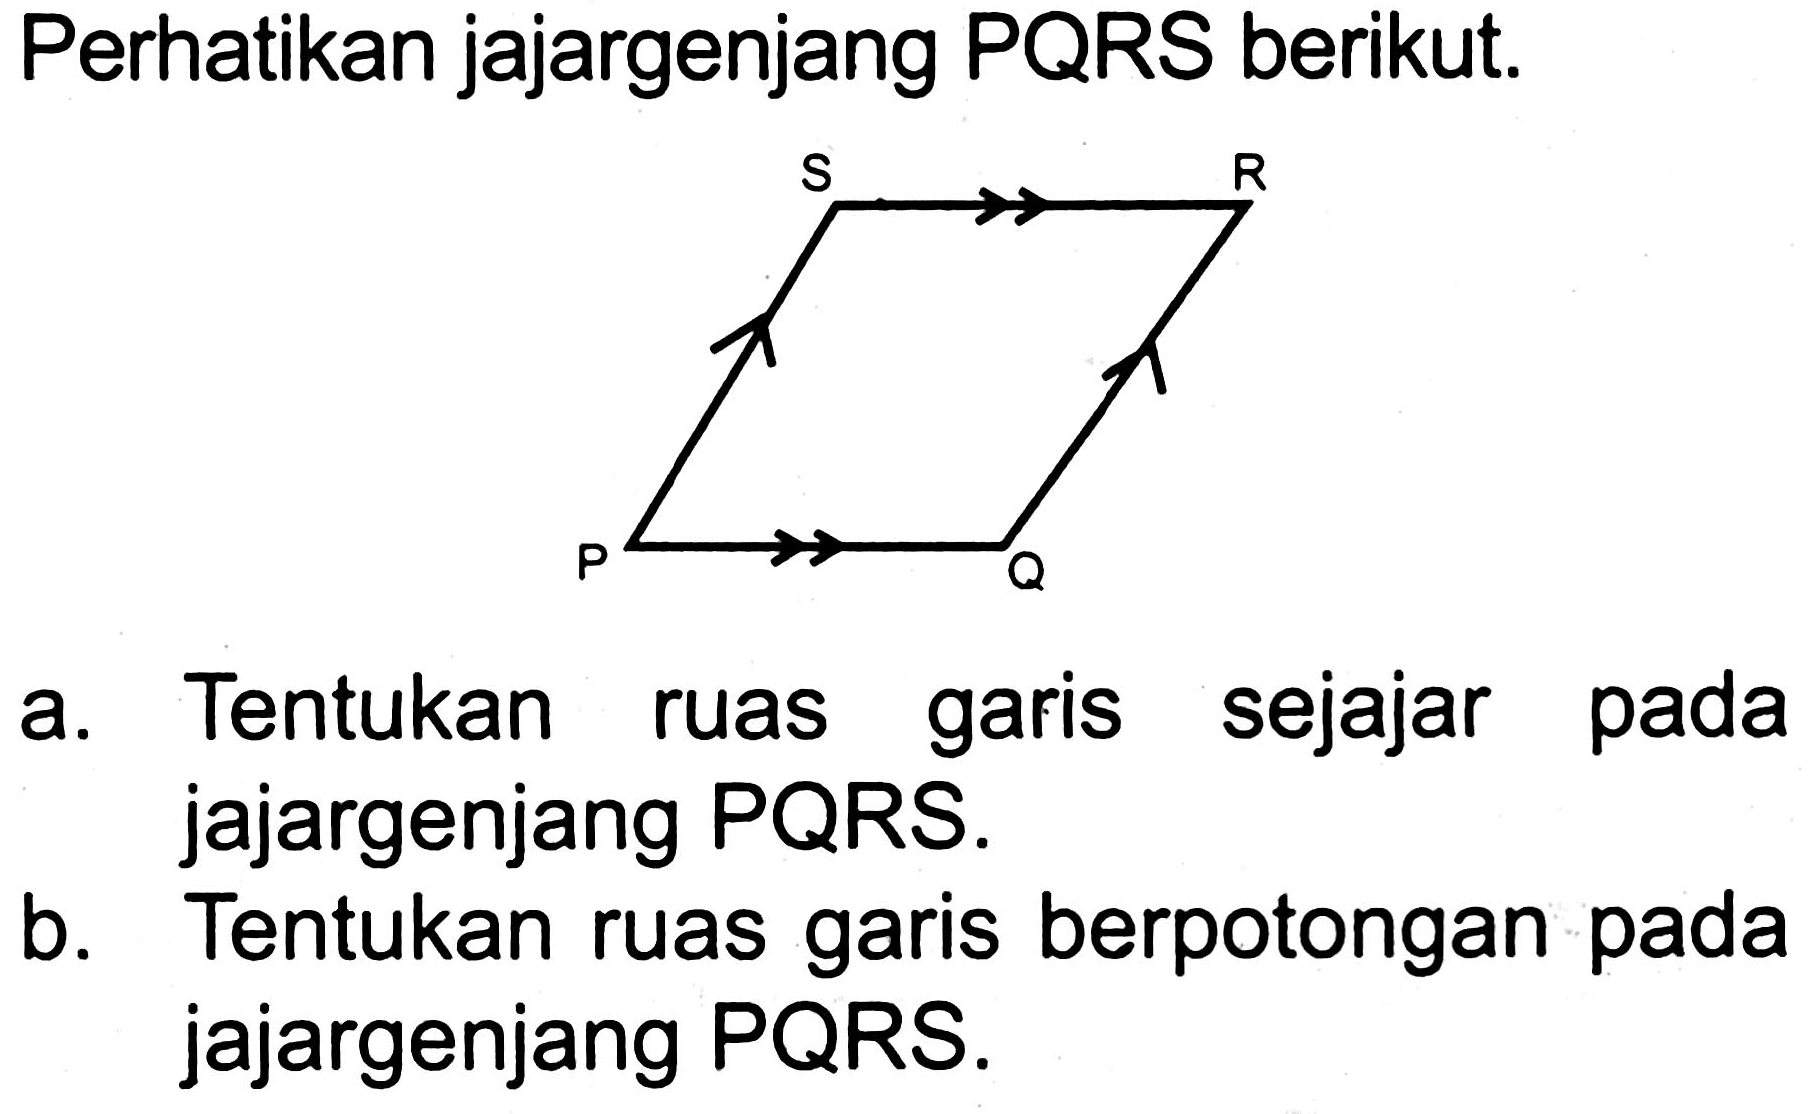 Perhatikan jajargenjang PQRS berikut.
C1C2CC3CC1CC(C2)C3
a. Tentukan ruas garis sejajar pada jajargenjang PQRS.
b. Tentukan ruas garis berpotongan pada jajargenjang PQRS.